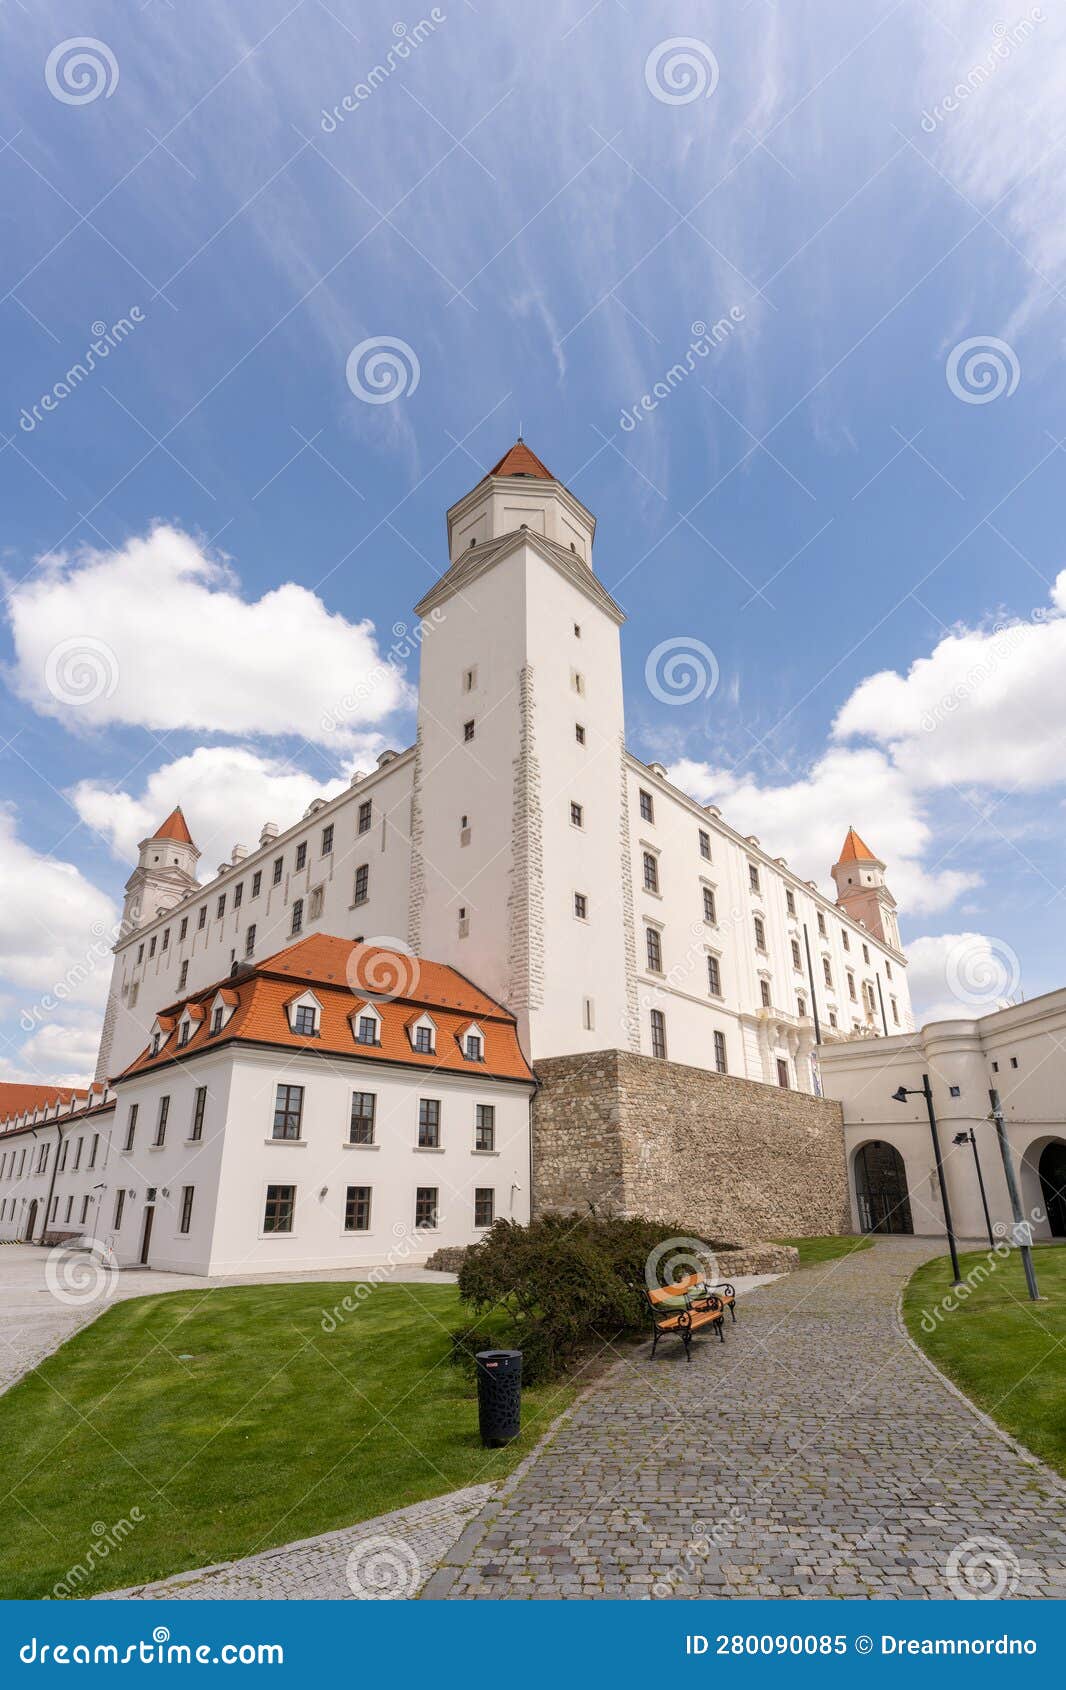 bratislava castle, the main castle of bratislava, the capital of slovakia